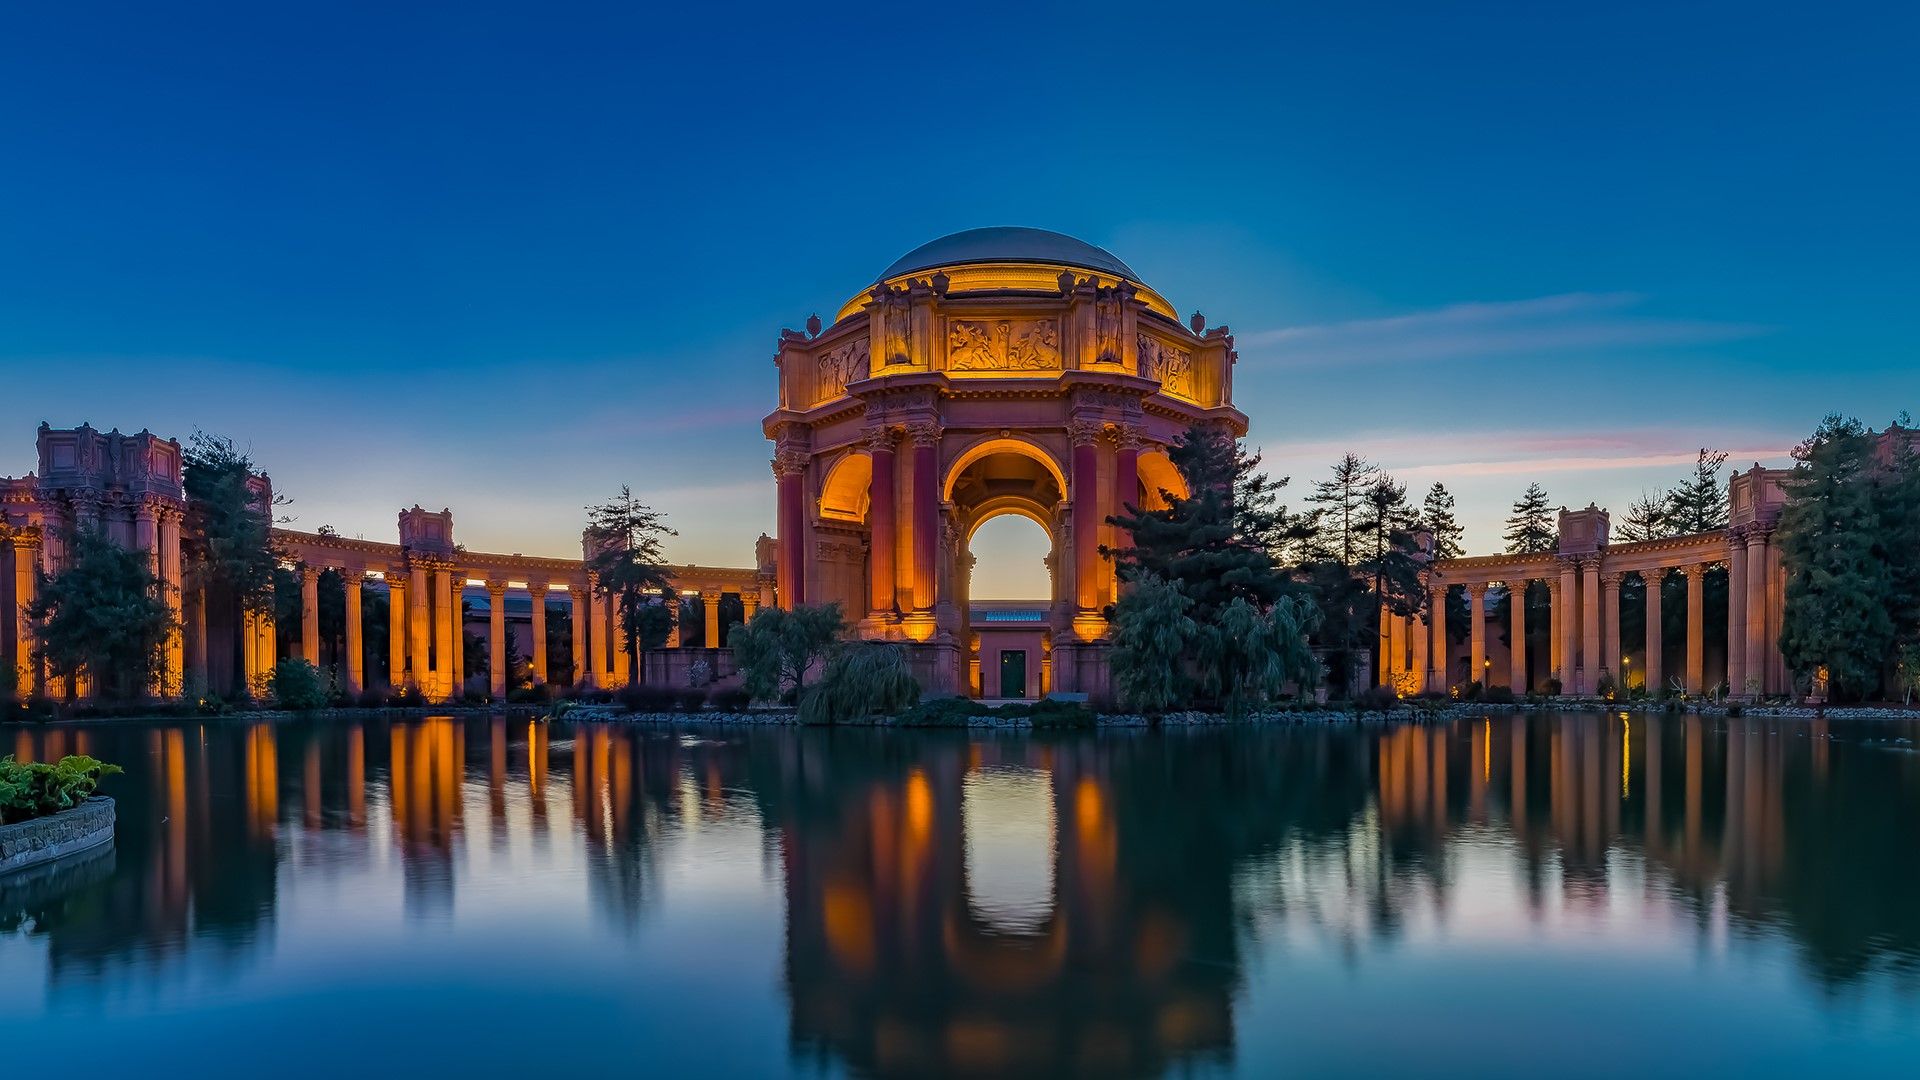 Illuminated Palace of Fine Arts at sunset in San Francisco, California, USA. Windows 10 Spotlight Image